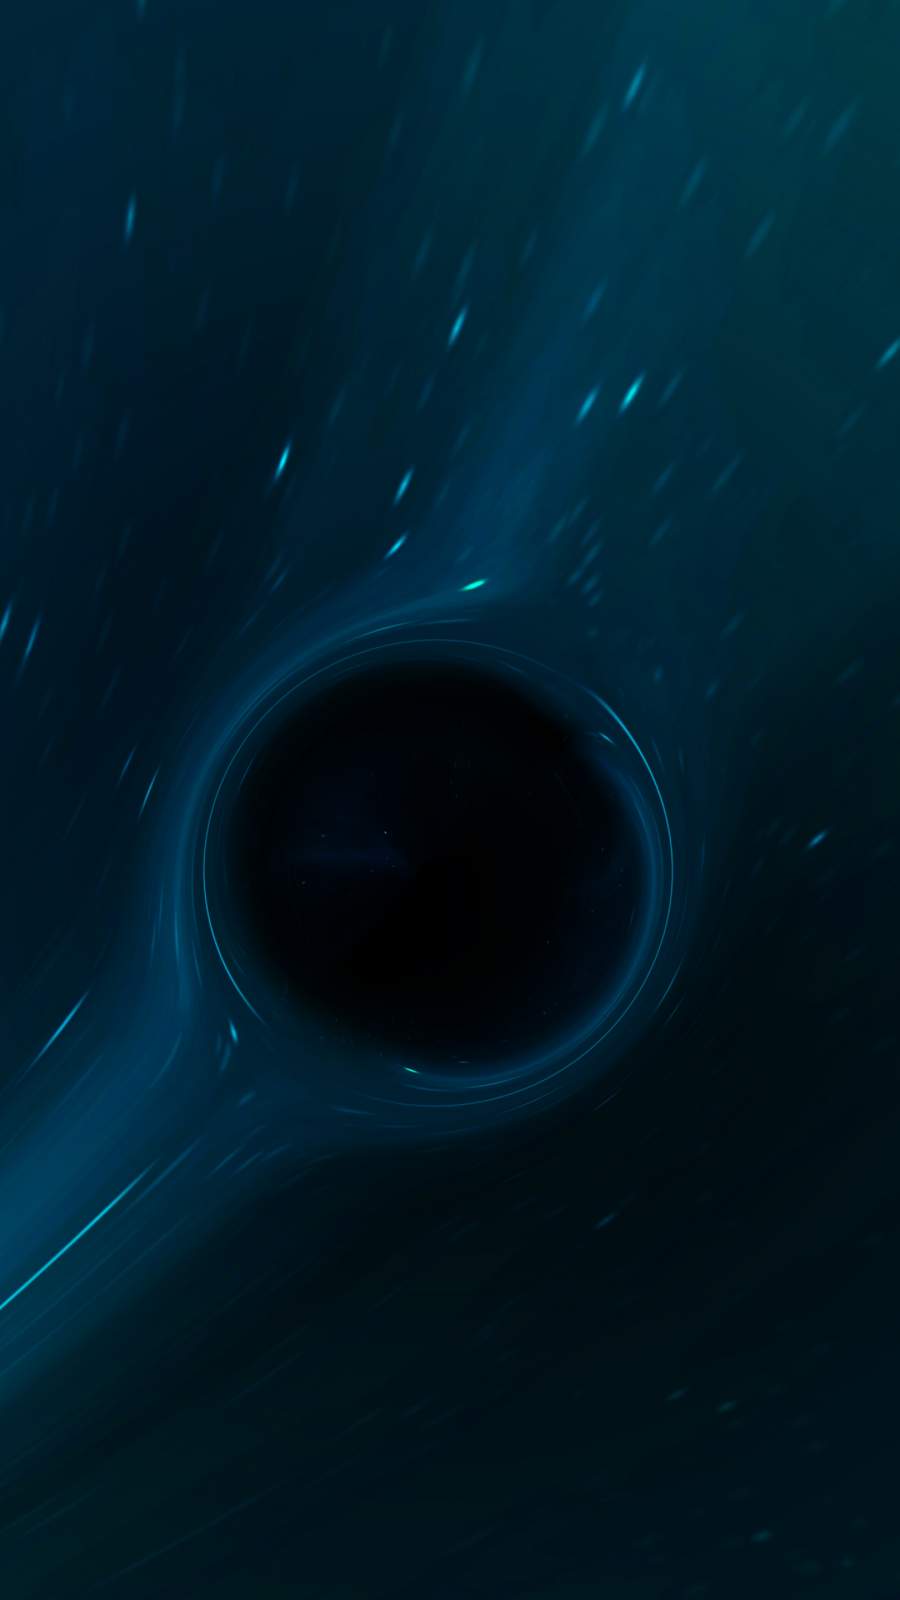 Black Hole IPhone Wallpaper Wallpaper, iPhone Wallpaper